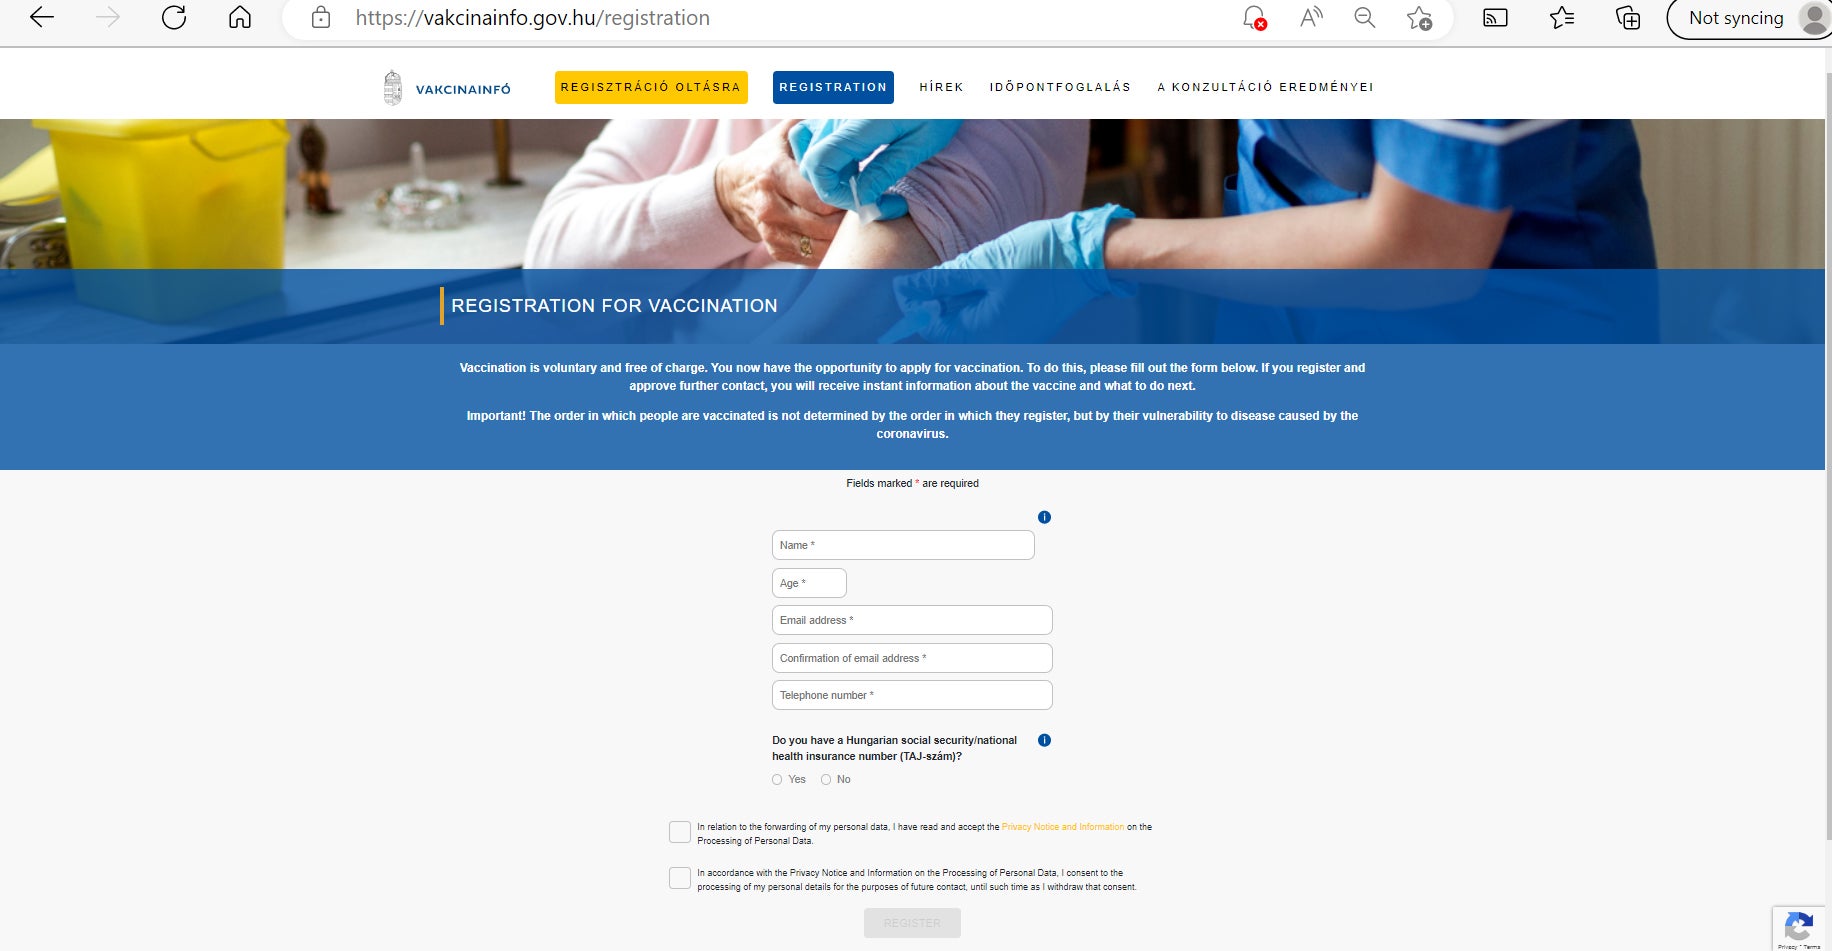 Vaccination registration website screenshot